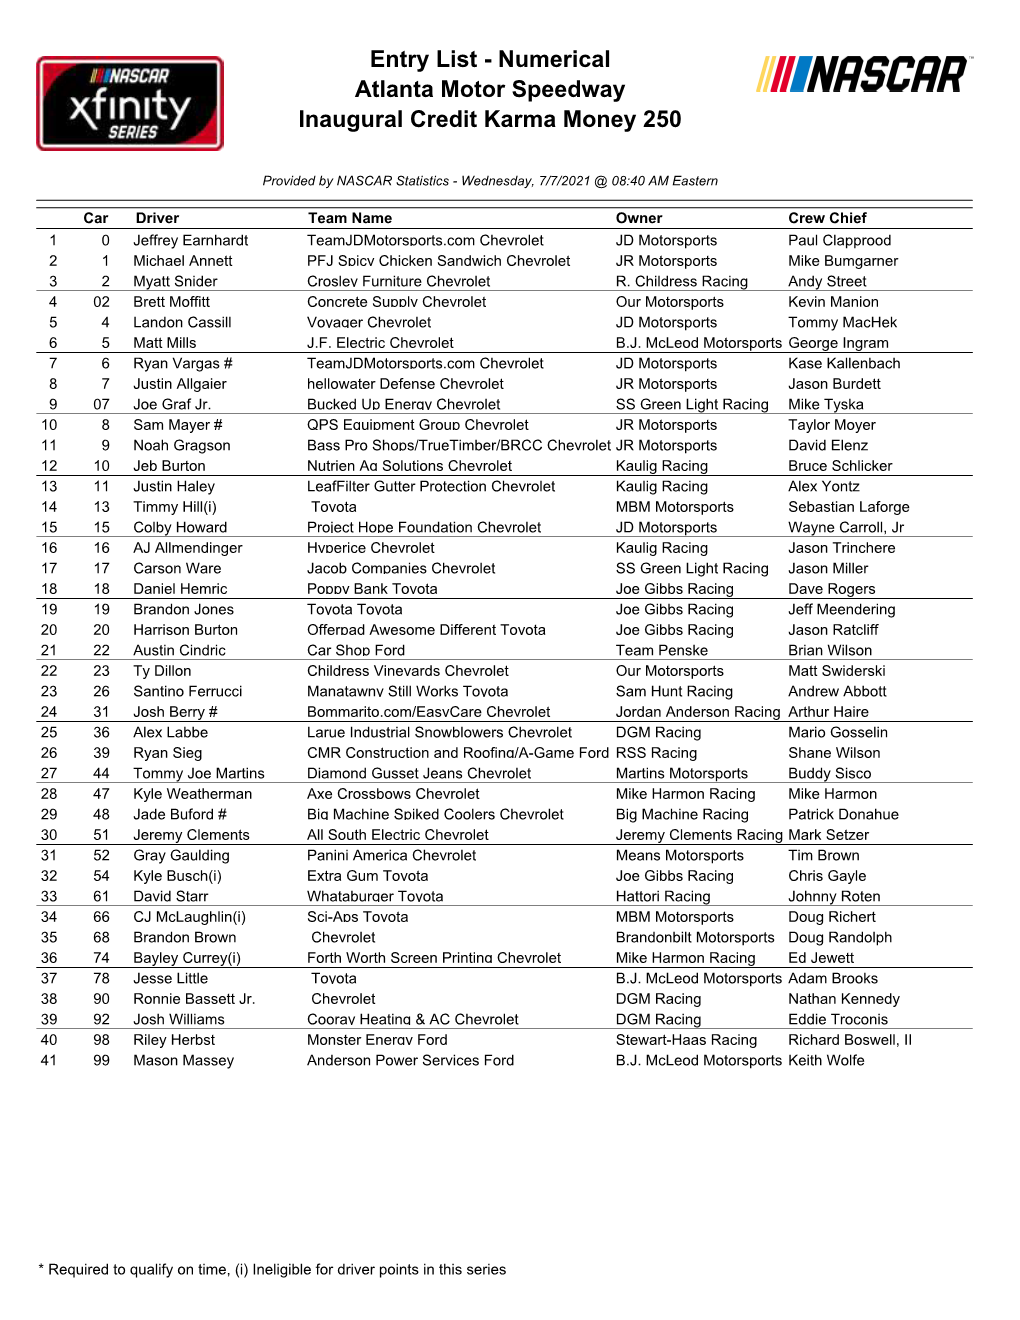 Entry List - Numerical Atlanta Motor Speedway Inaugural Credit Karma Money 250